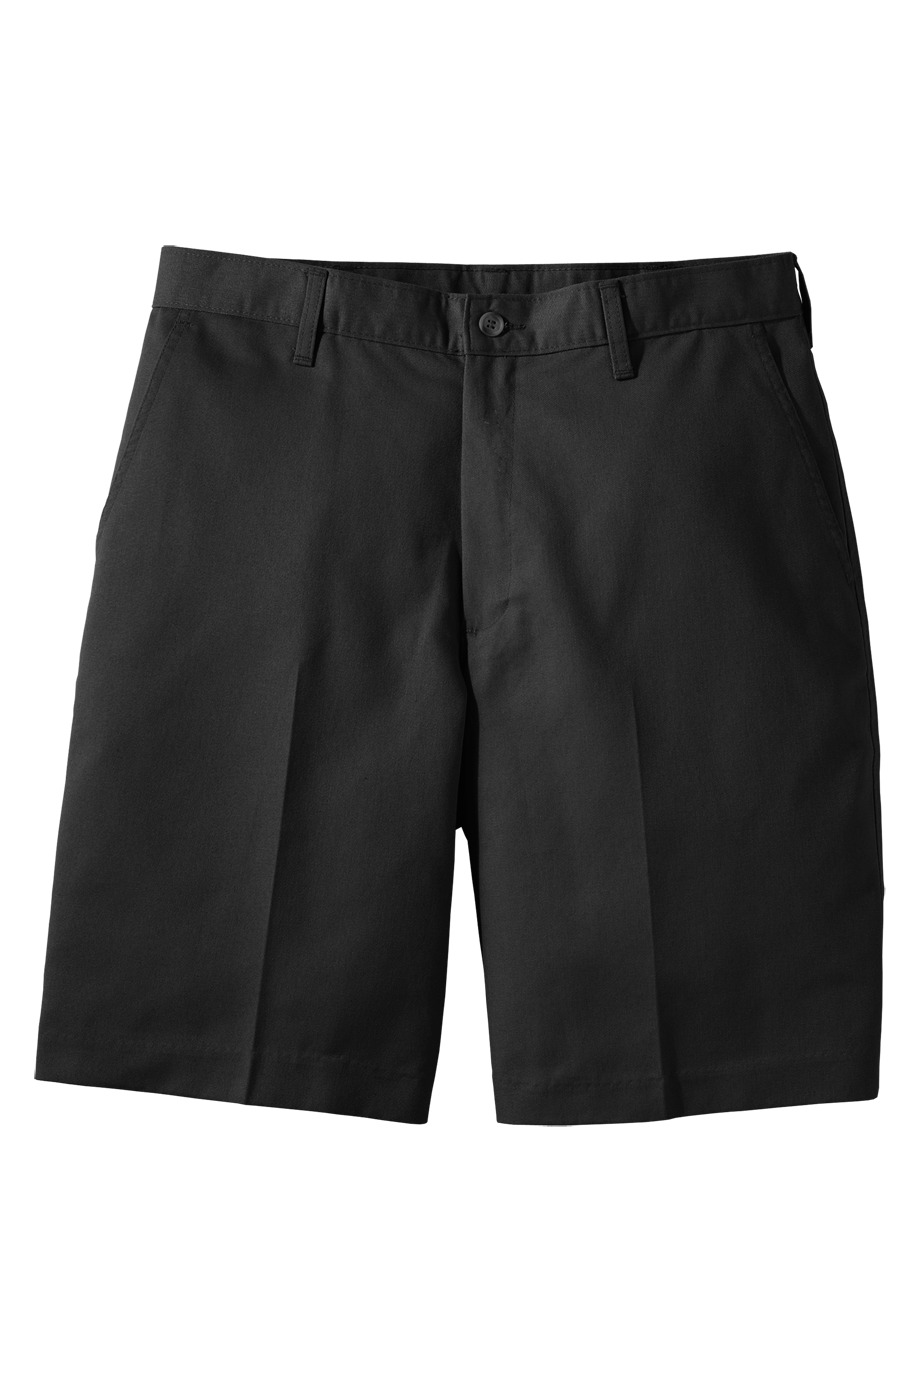 Edwards Garment 2460 - Men's Flat Front Short